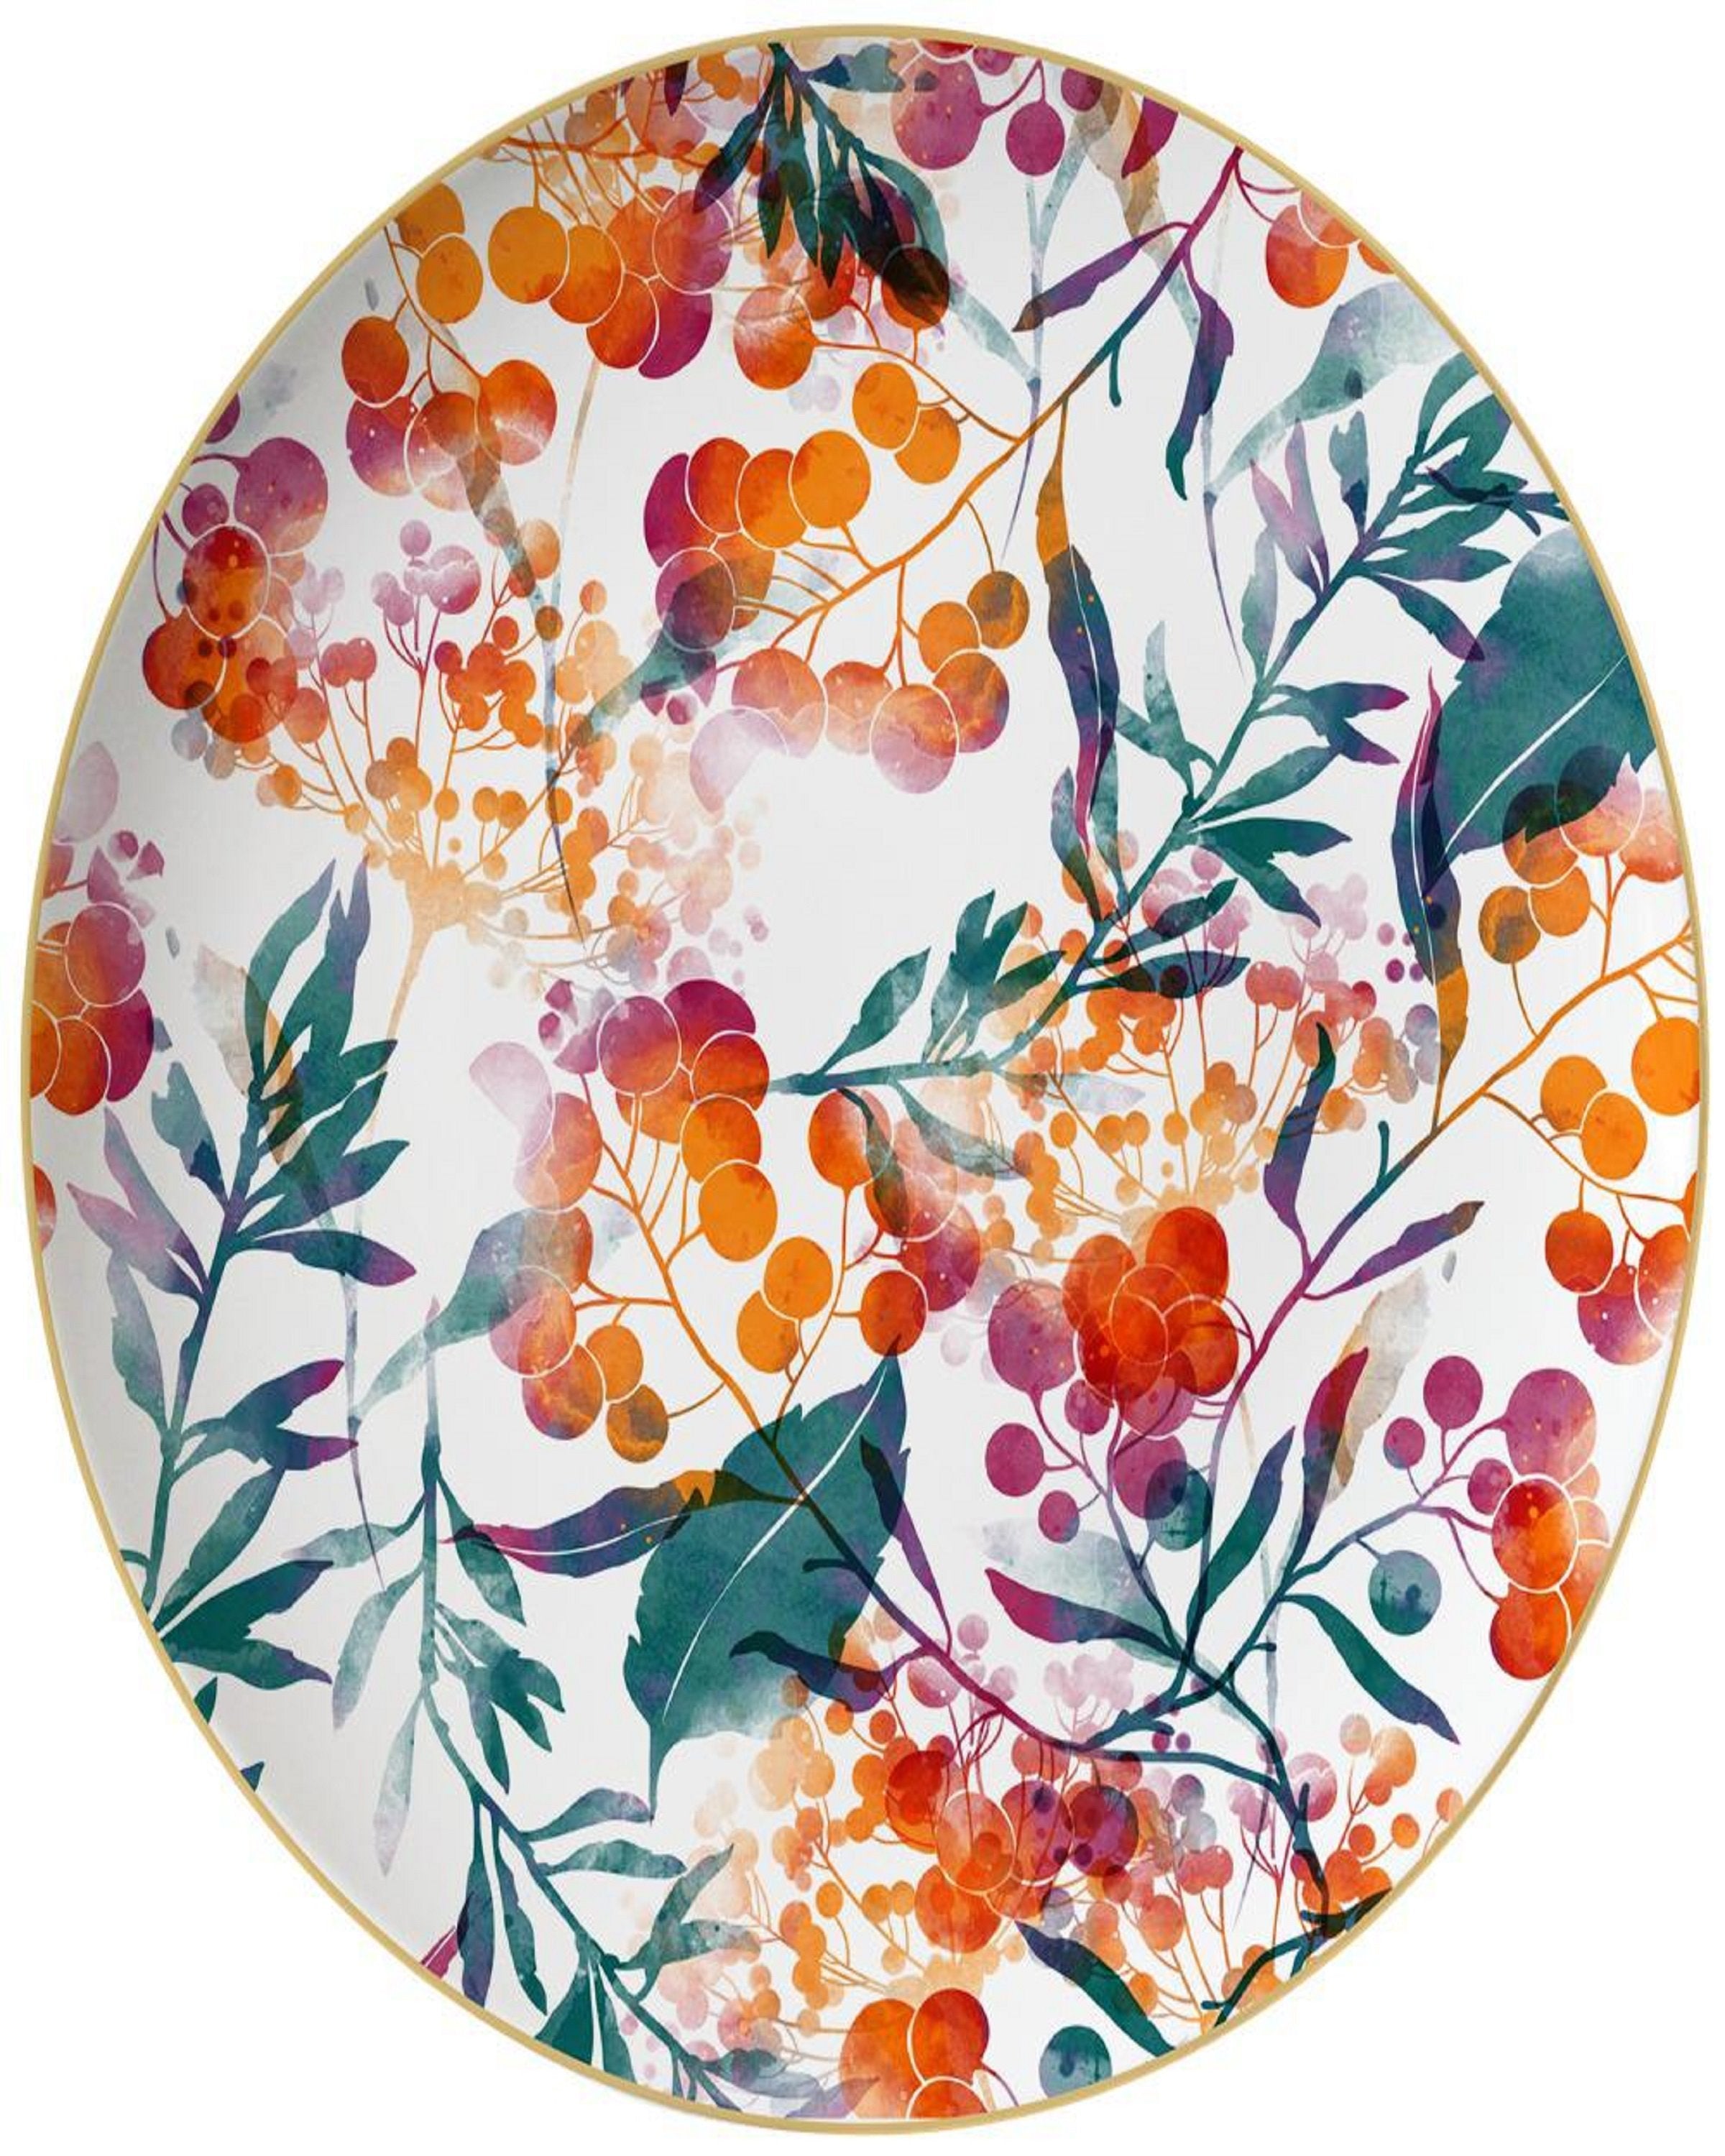 Printed Colorful Ceramic Dinner Plates